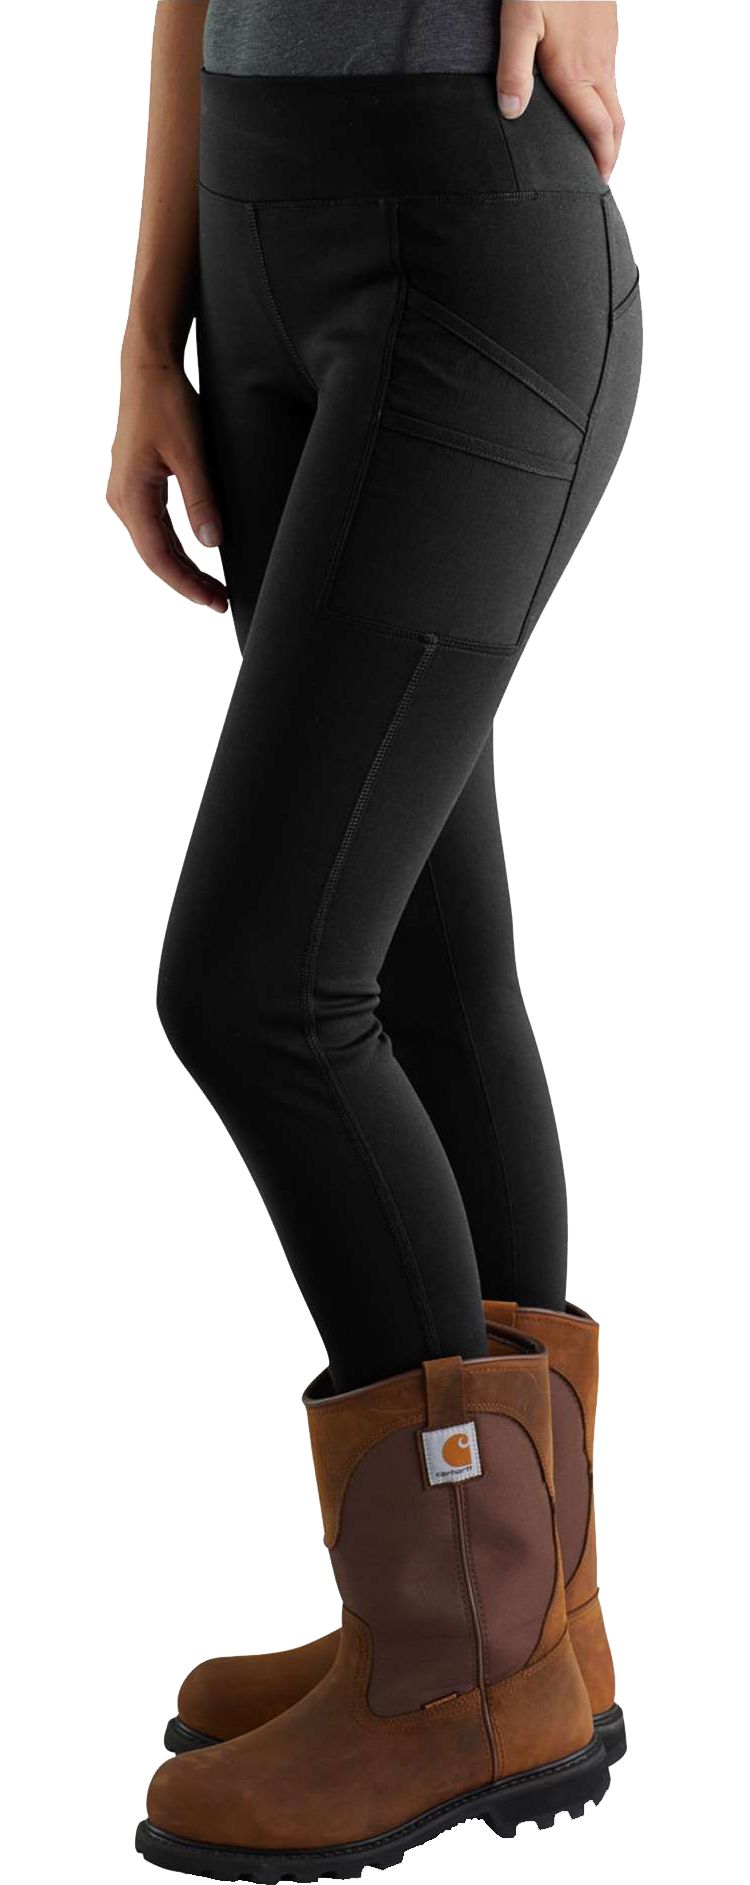 Carhartt 103609 Women's Force Lightweight Utility Legging - Black